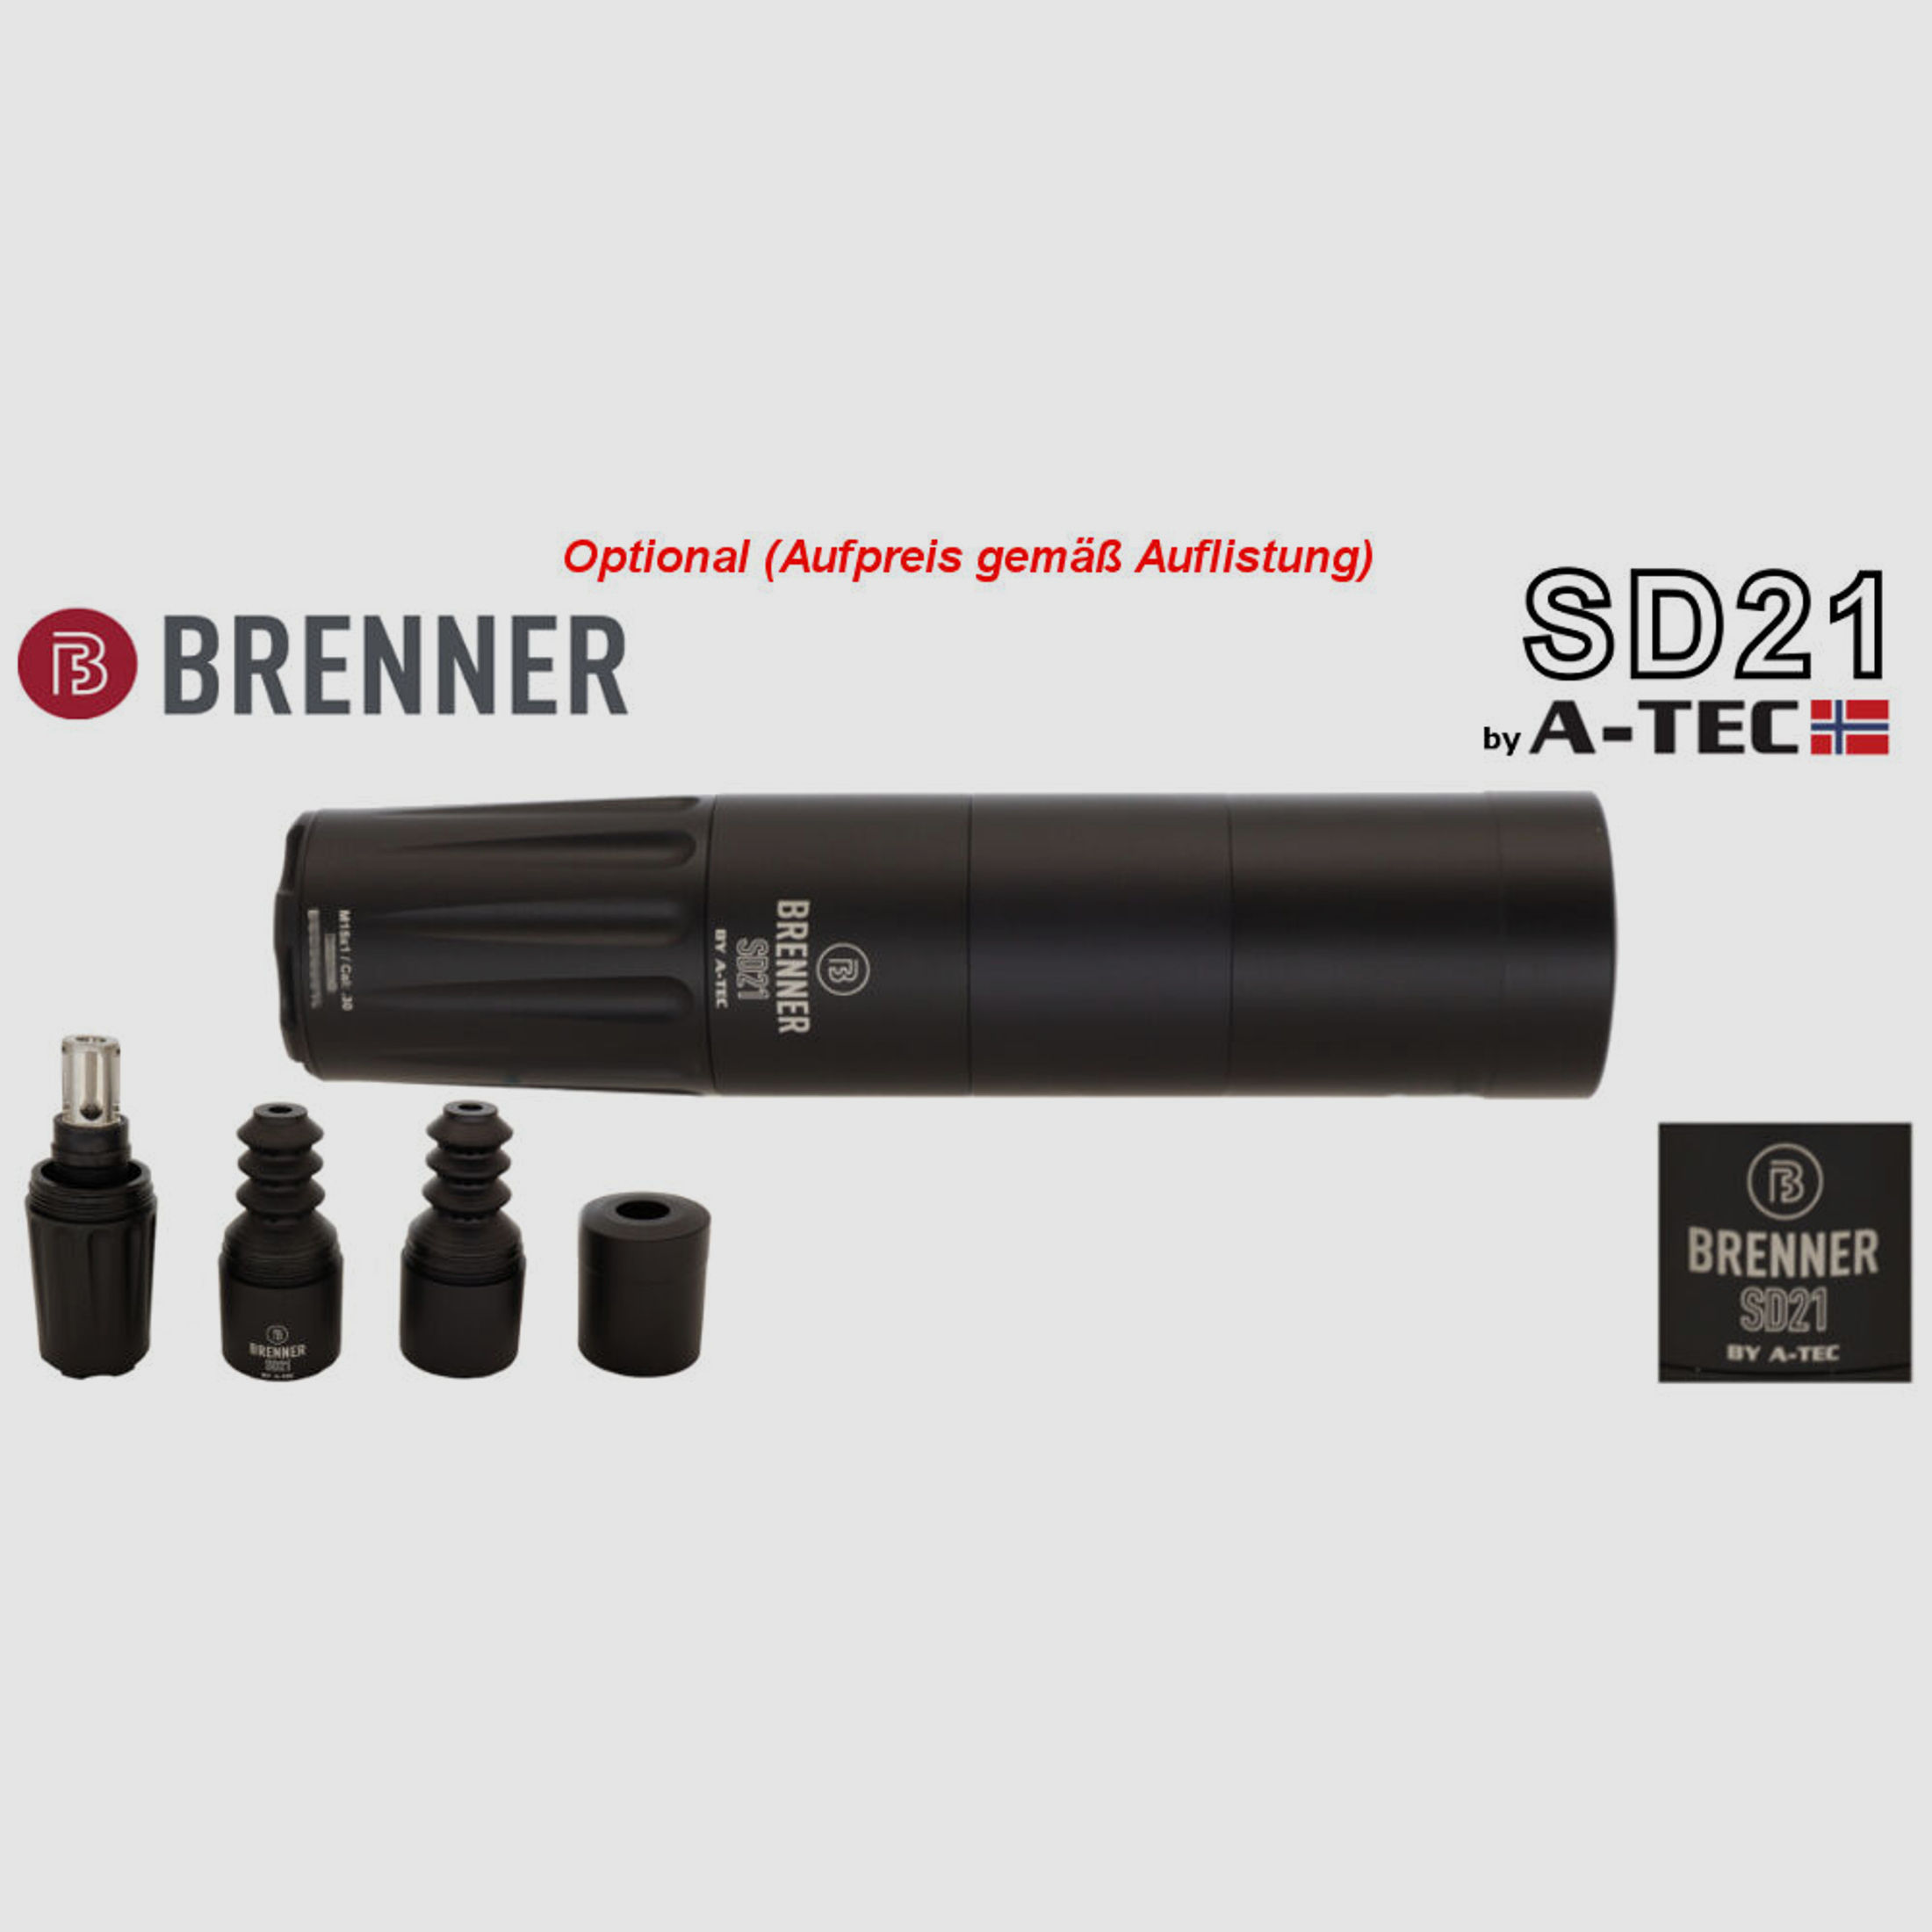 Bergara	 B14 B&H Prohunter Flex LINKS Lochschaft mit Kahles Helia 2.4-12x56 fertig montiert / Optional: Brenner Schalldämpfer